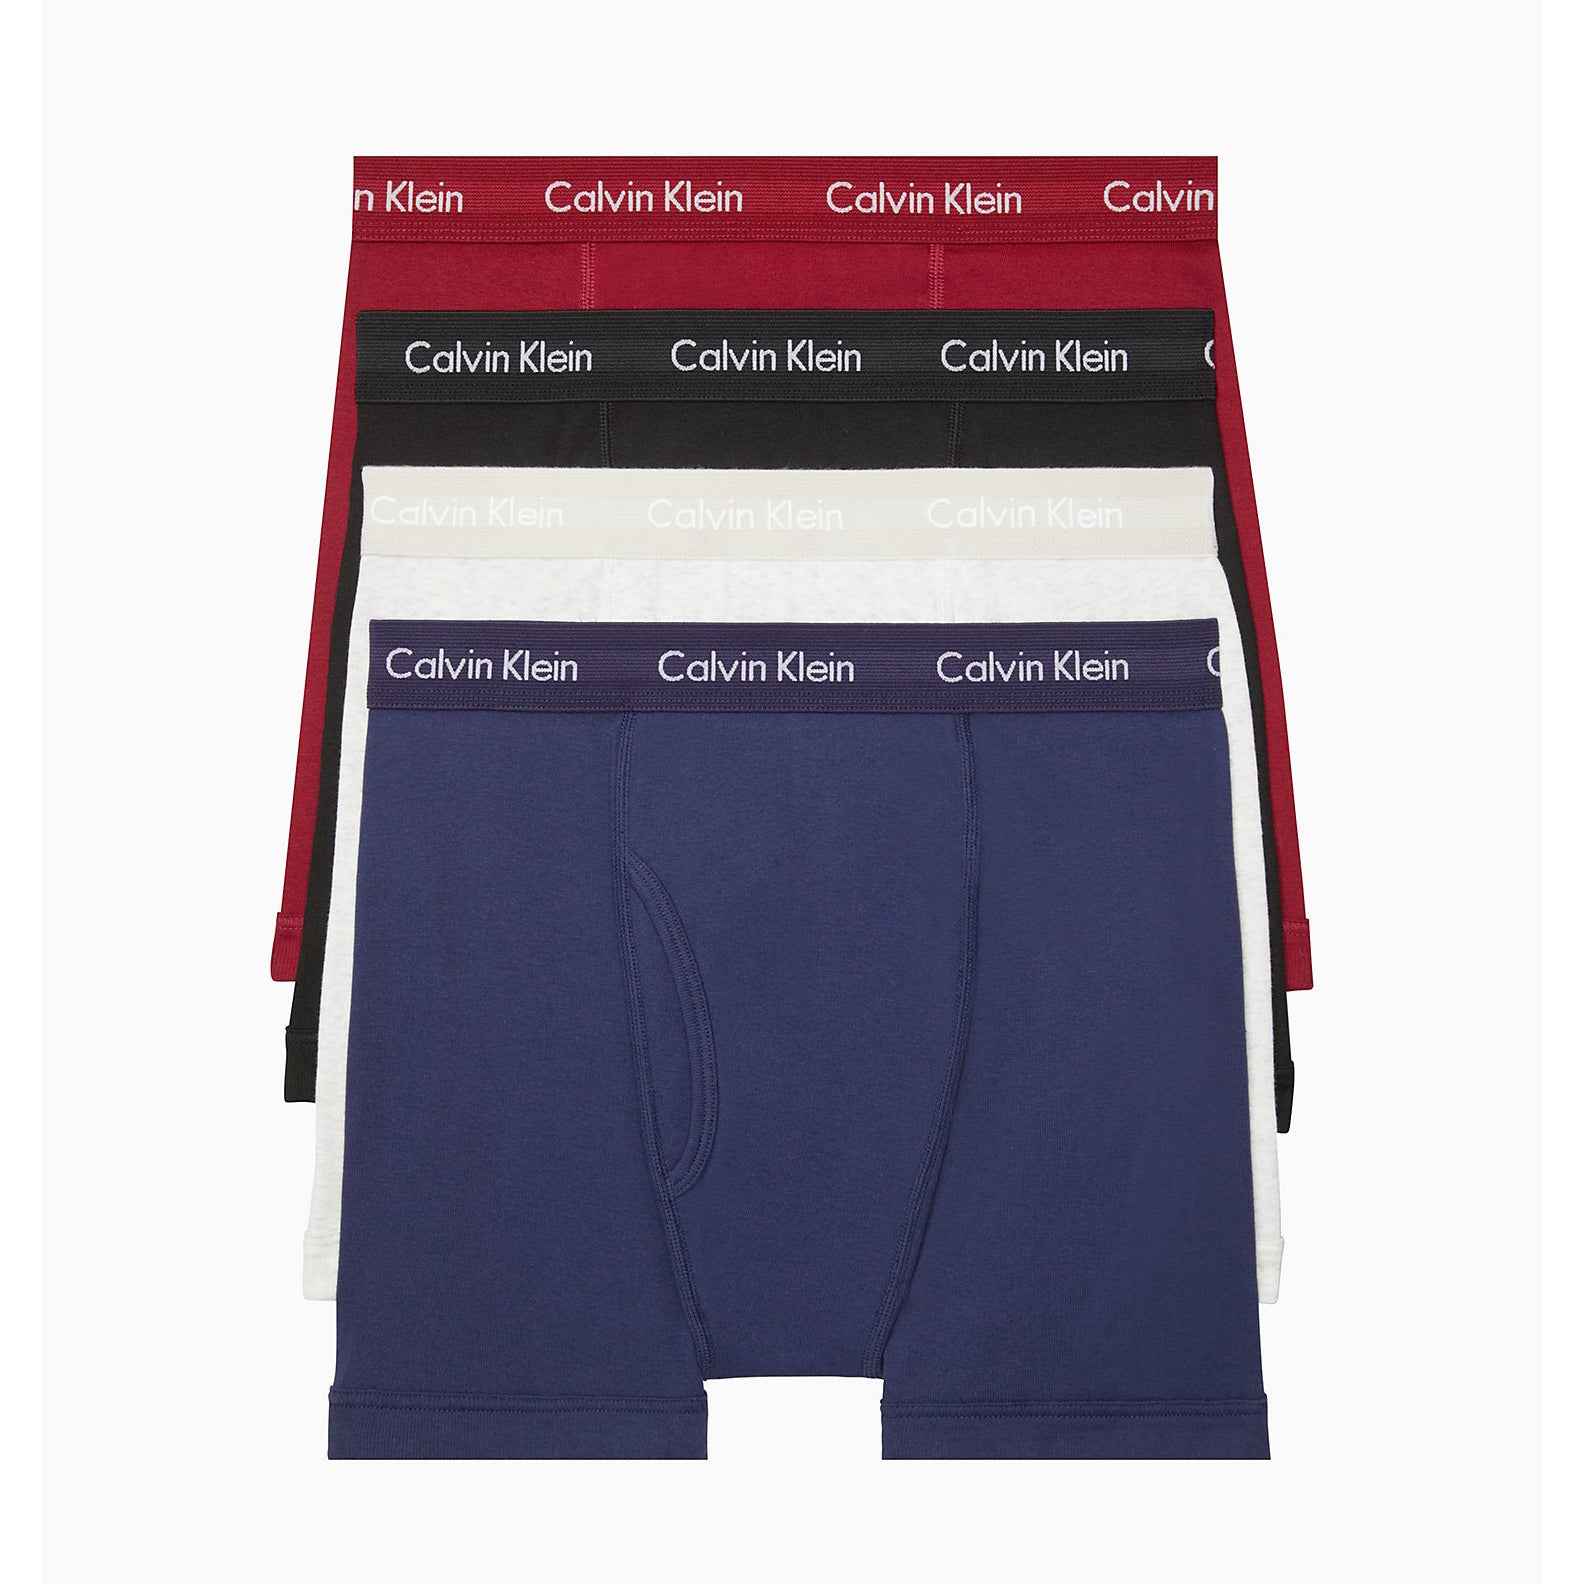 Calvin Klein Cotton Classics Briefs, Pack of 4